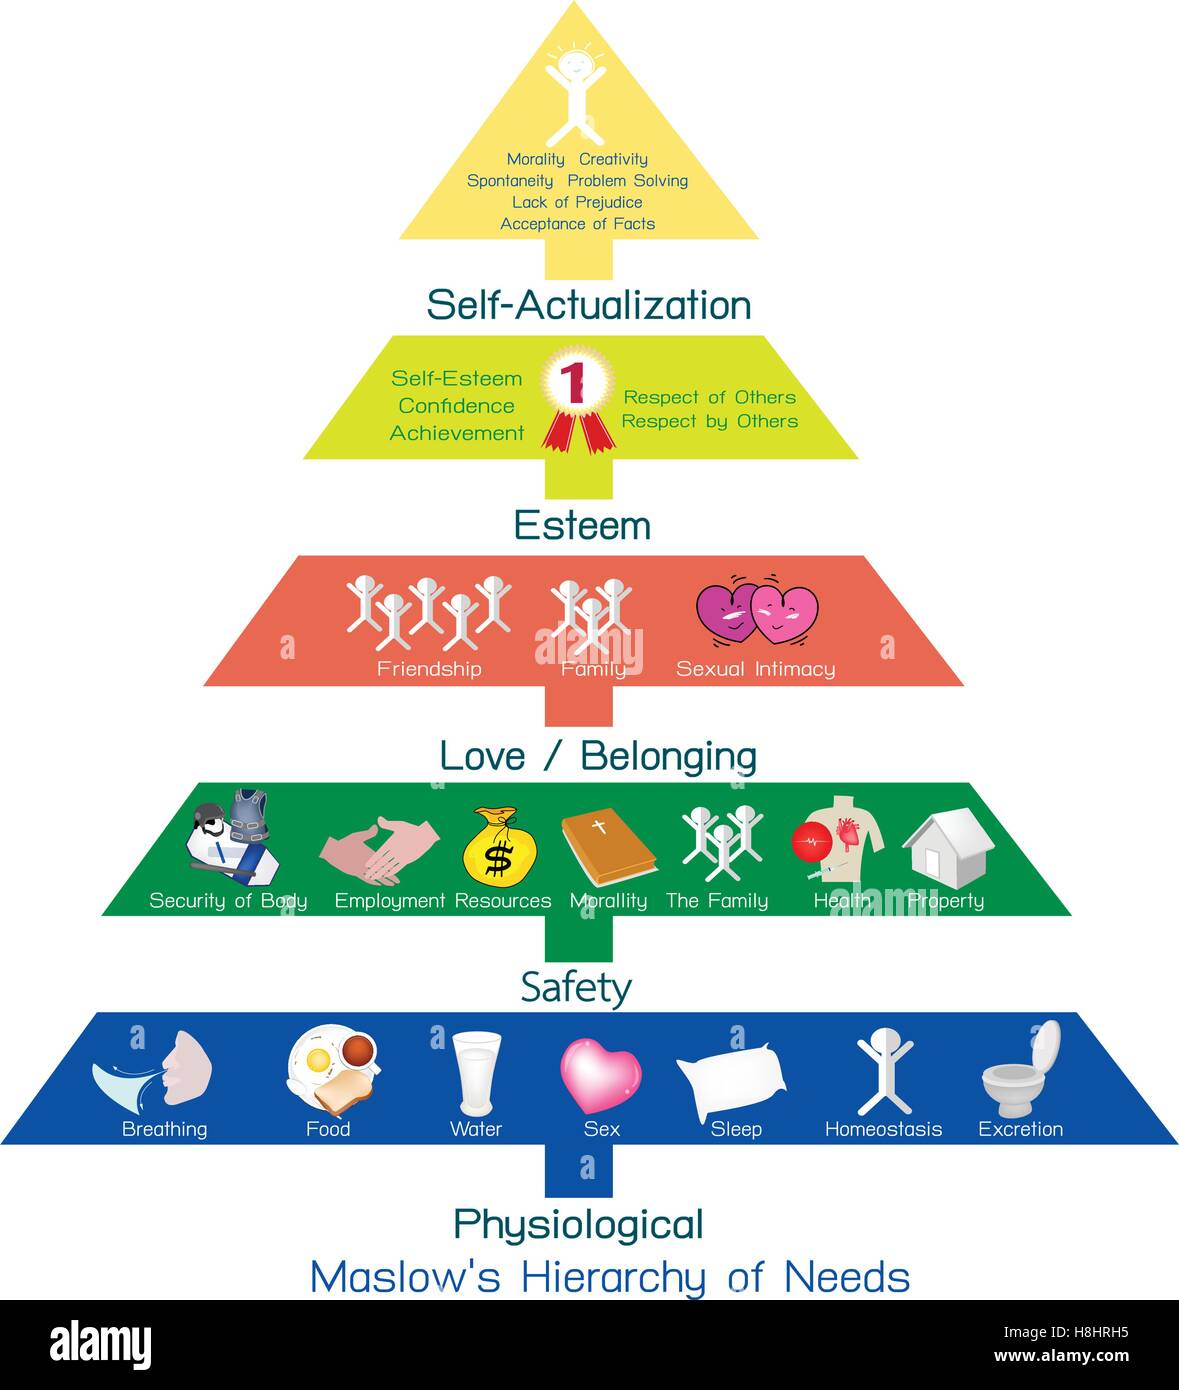 Abraham Maslow's Pyramid Of Human Needs